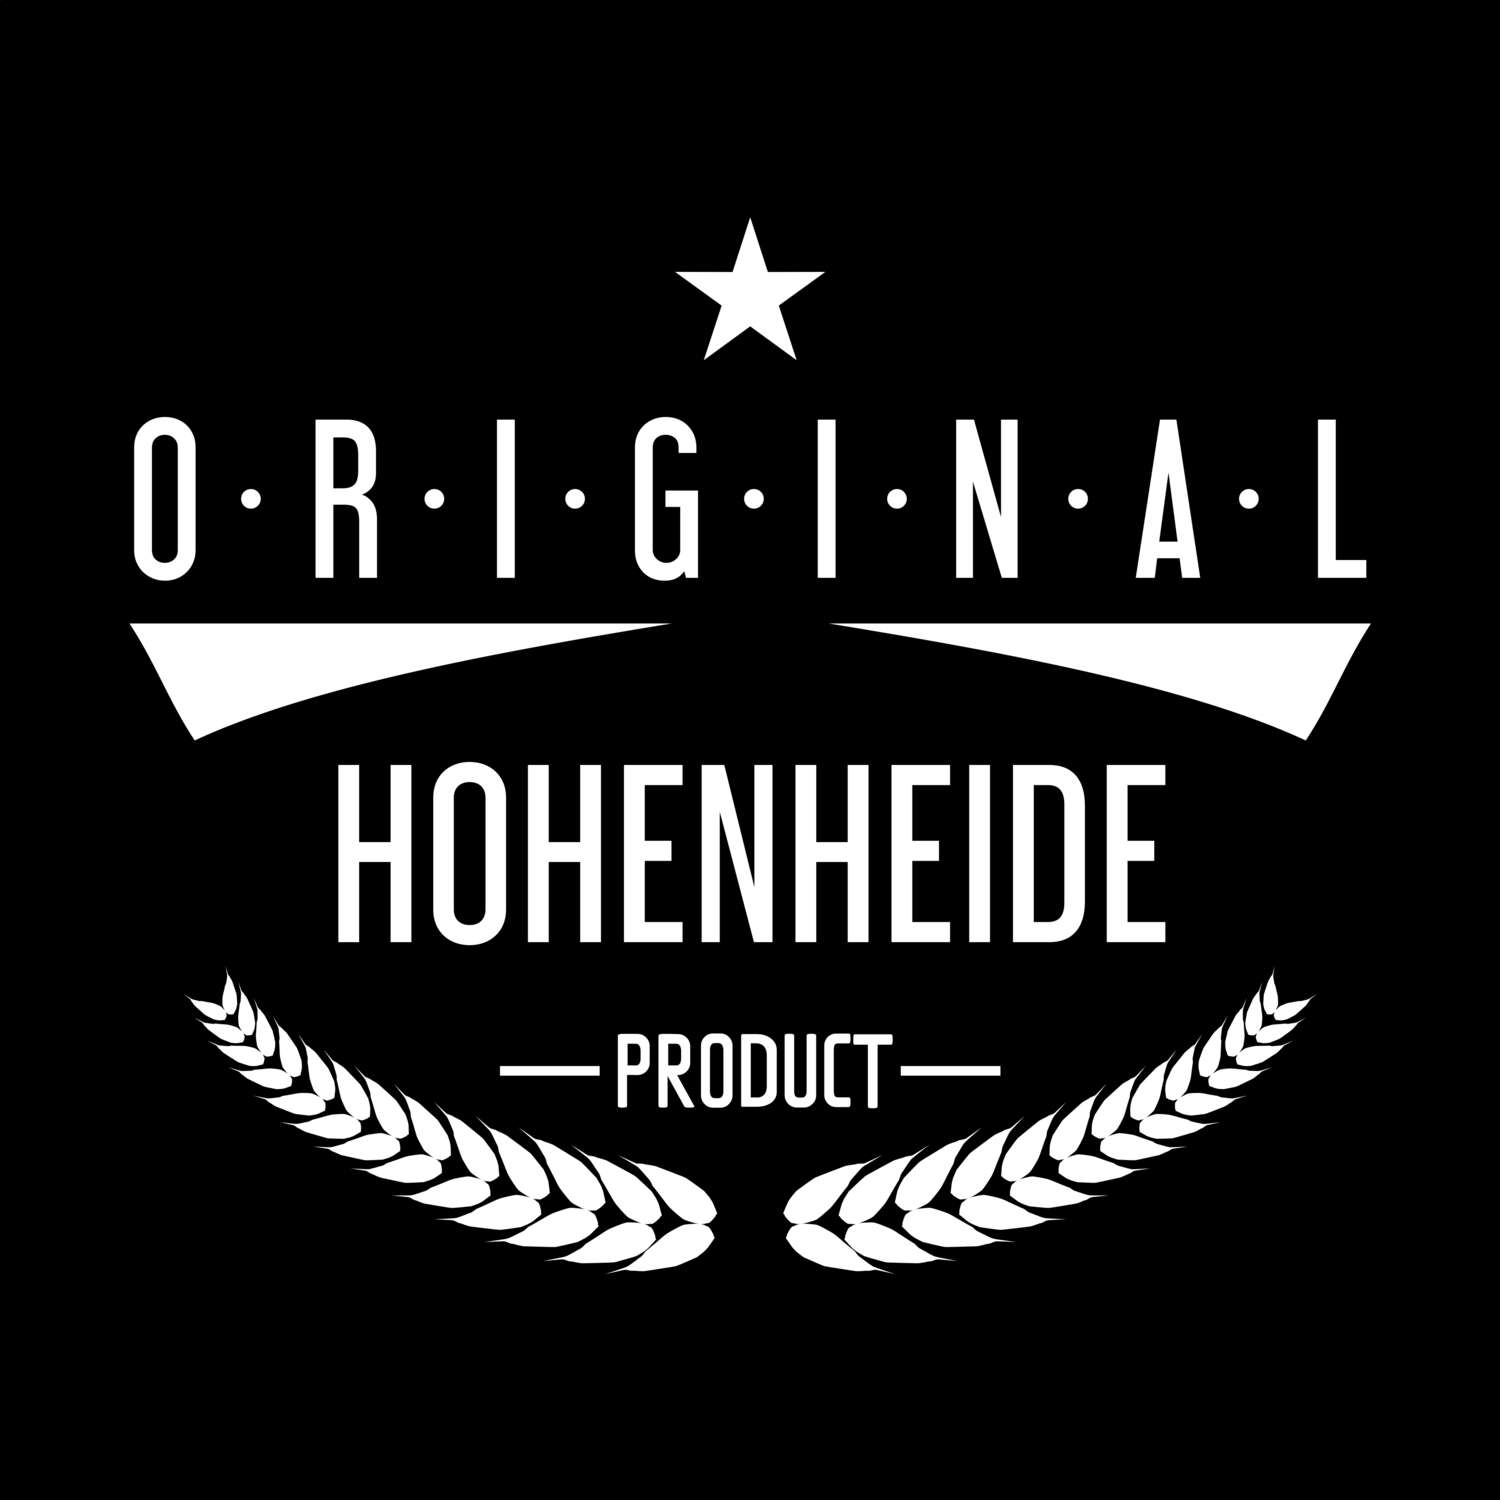 Hohenheide T-Shirt »Original Product«